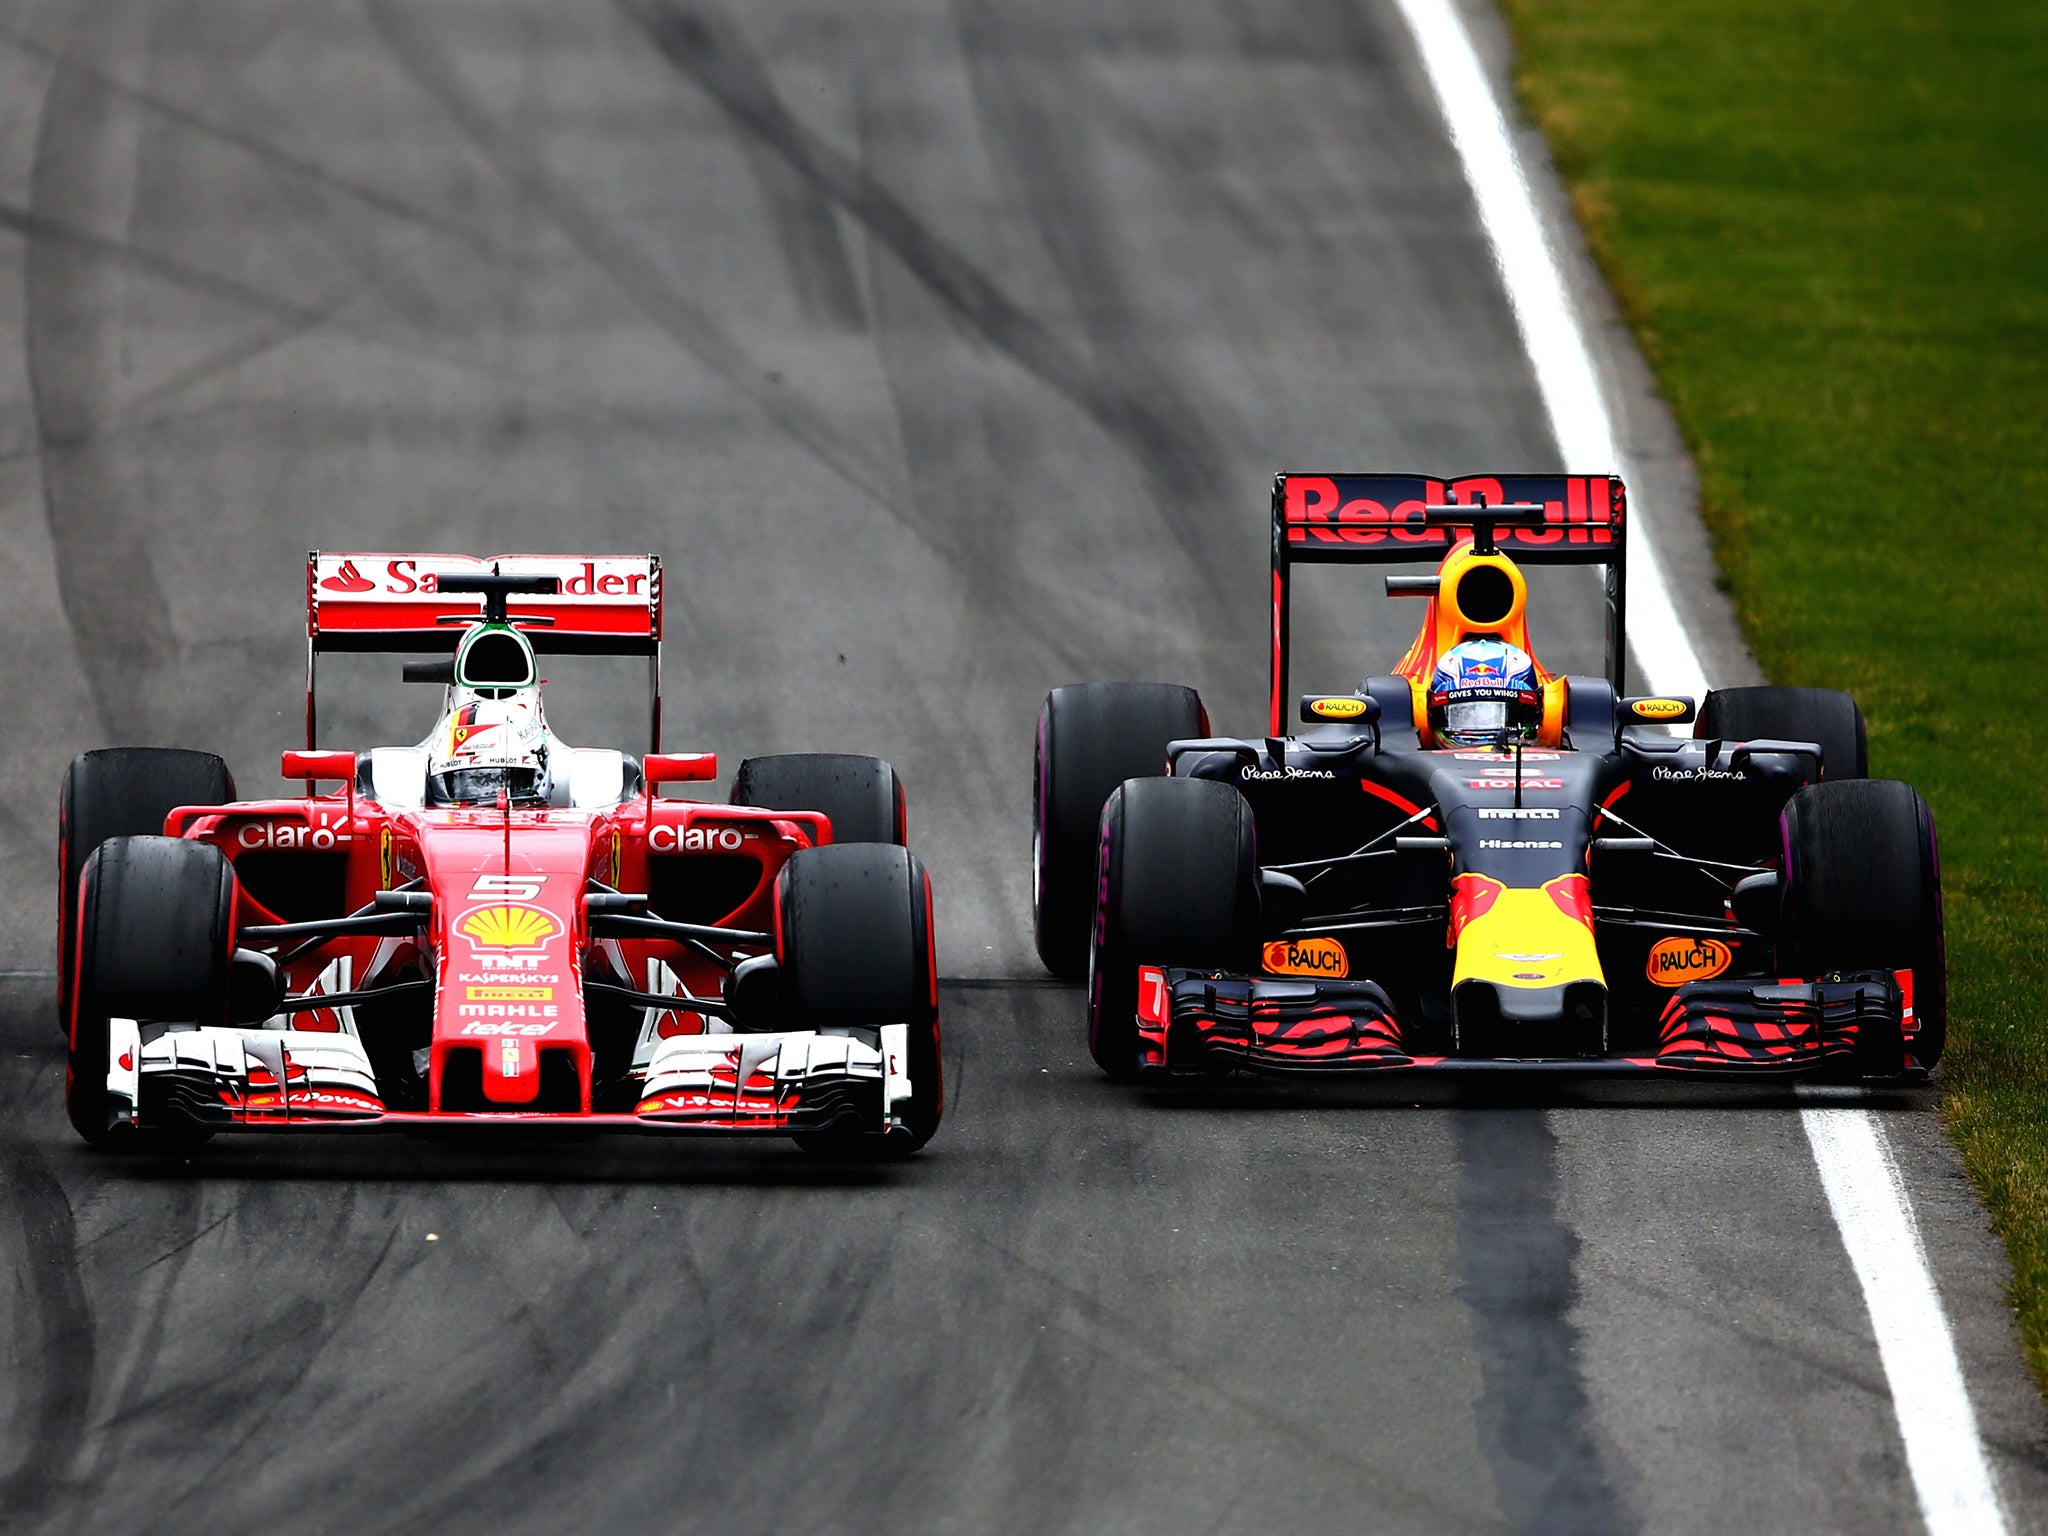 &#13;
Vettel gets past?Daniel Ricciardo on his fresher tyres &#13;